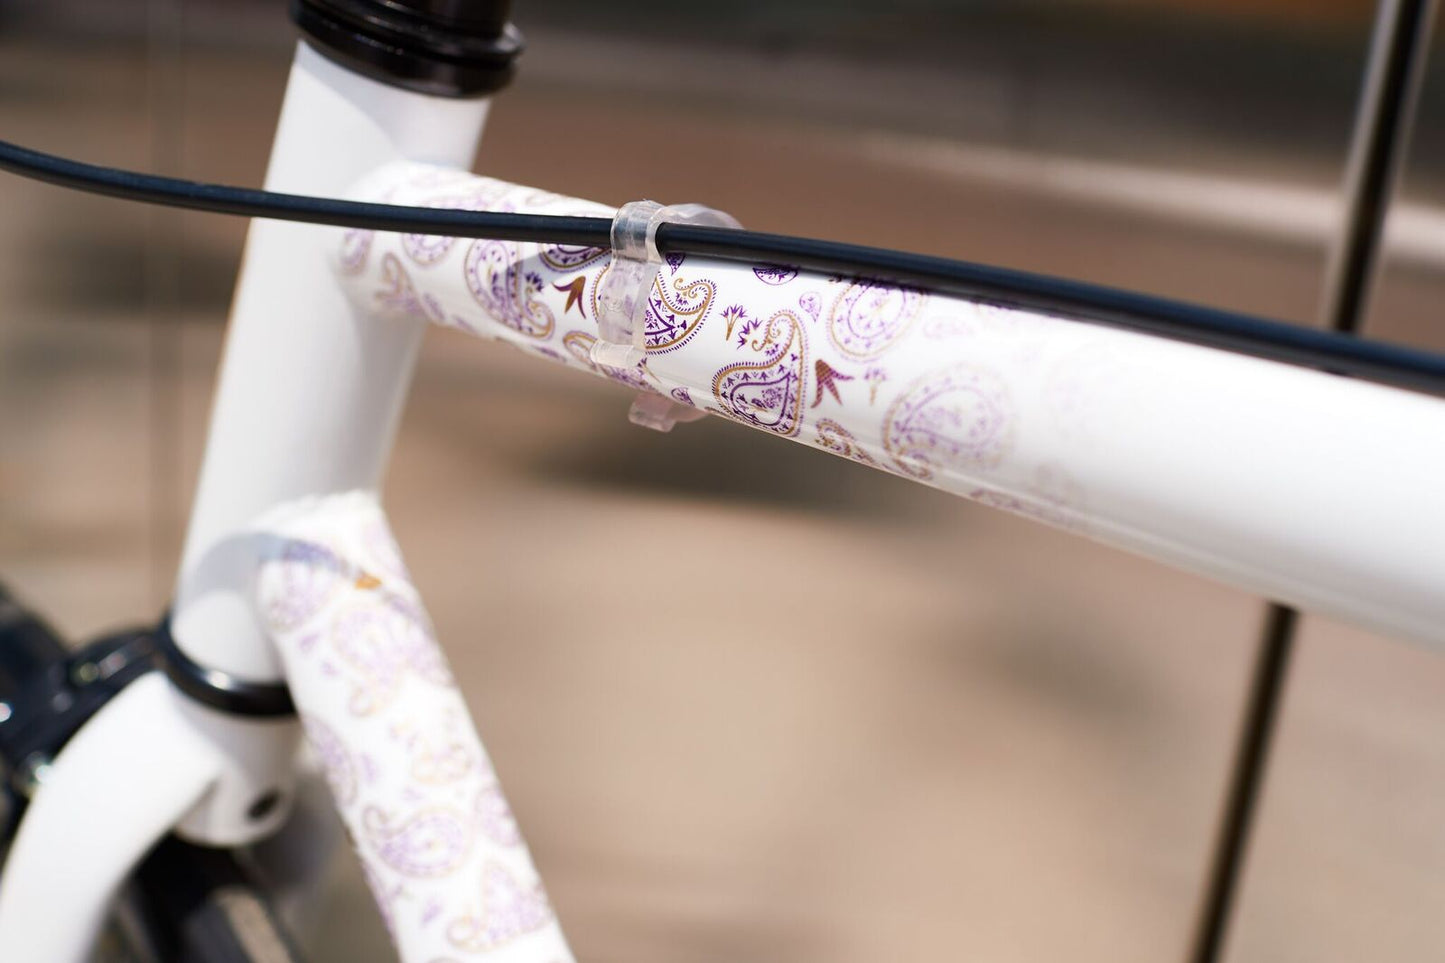 The White Lotus - A Studiiyo23 x State Bicycle Co. Collab